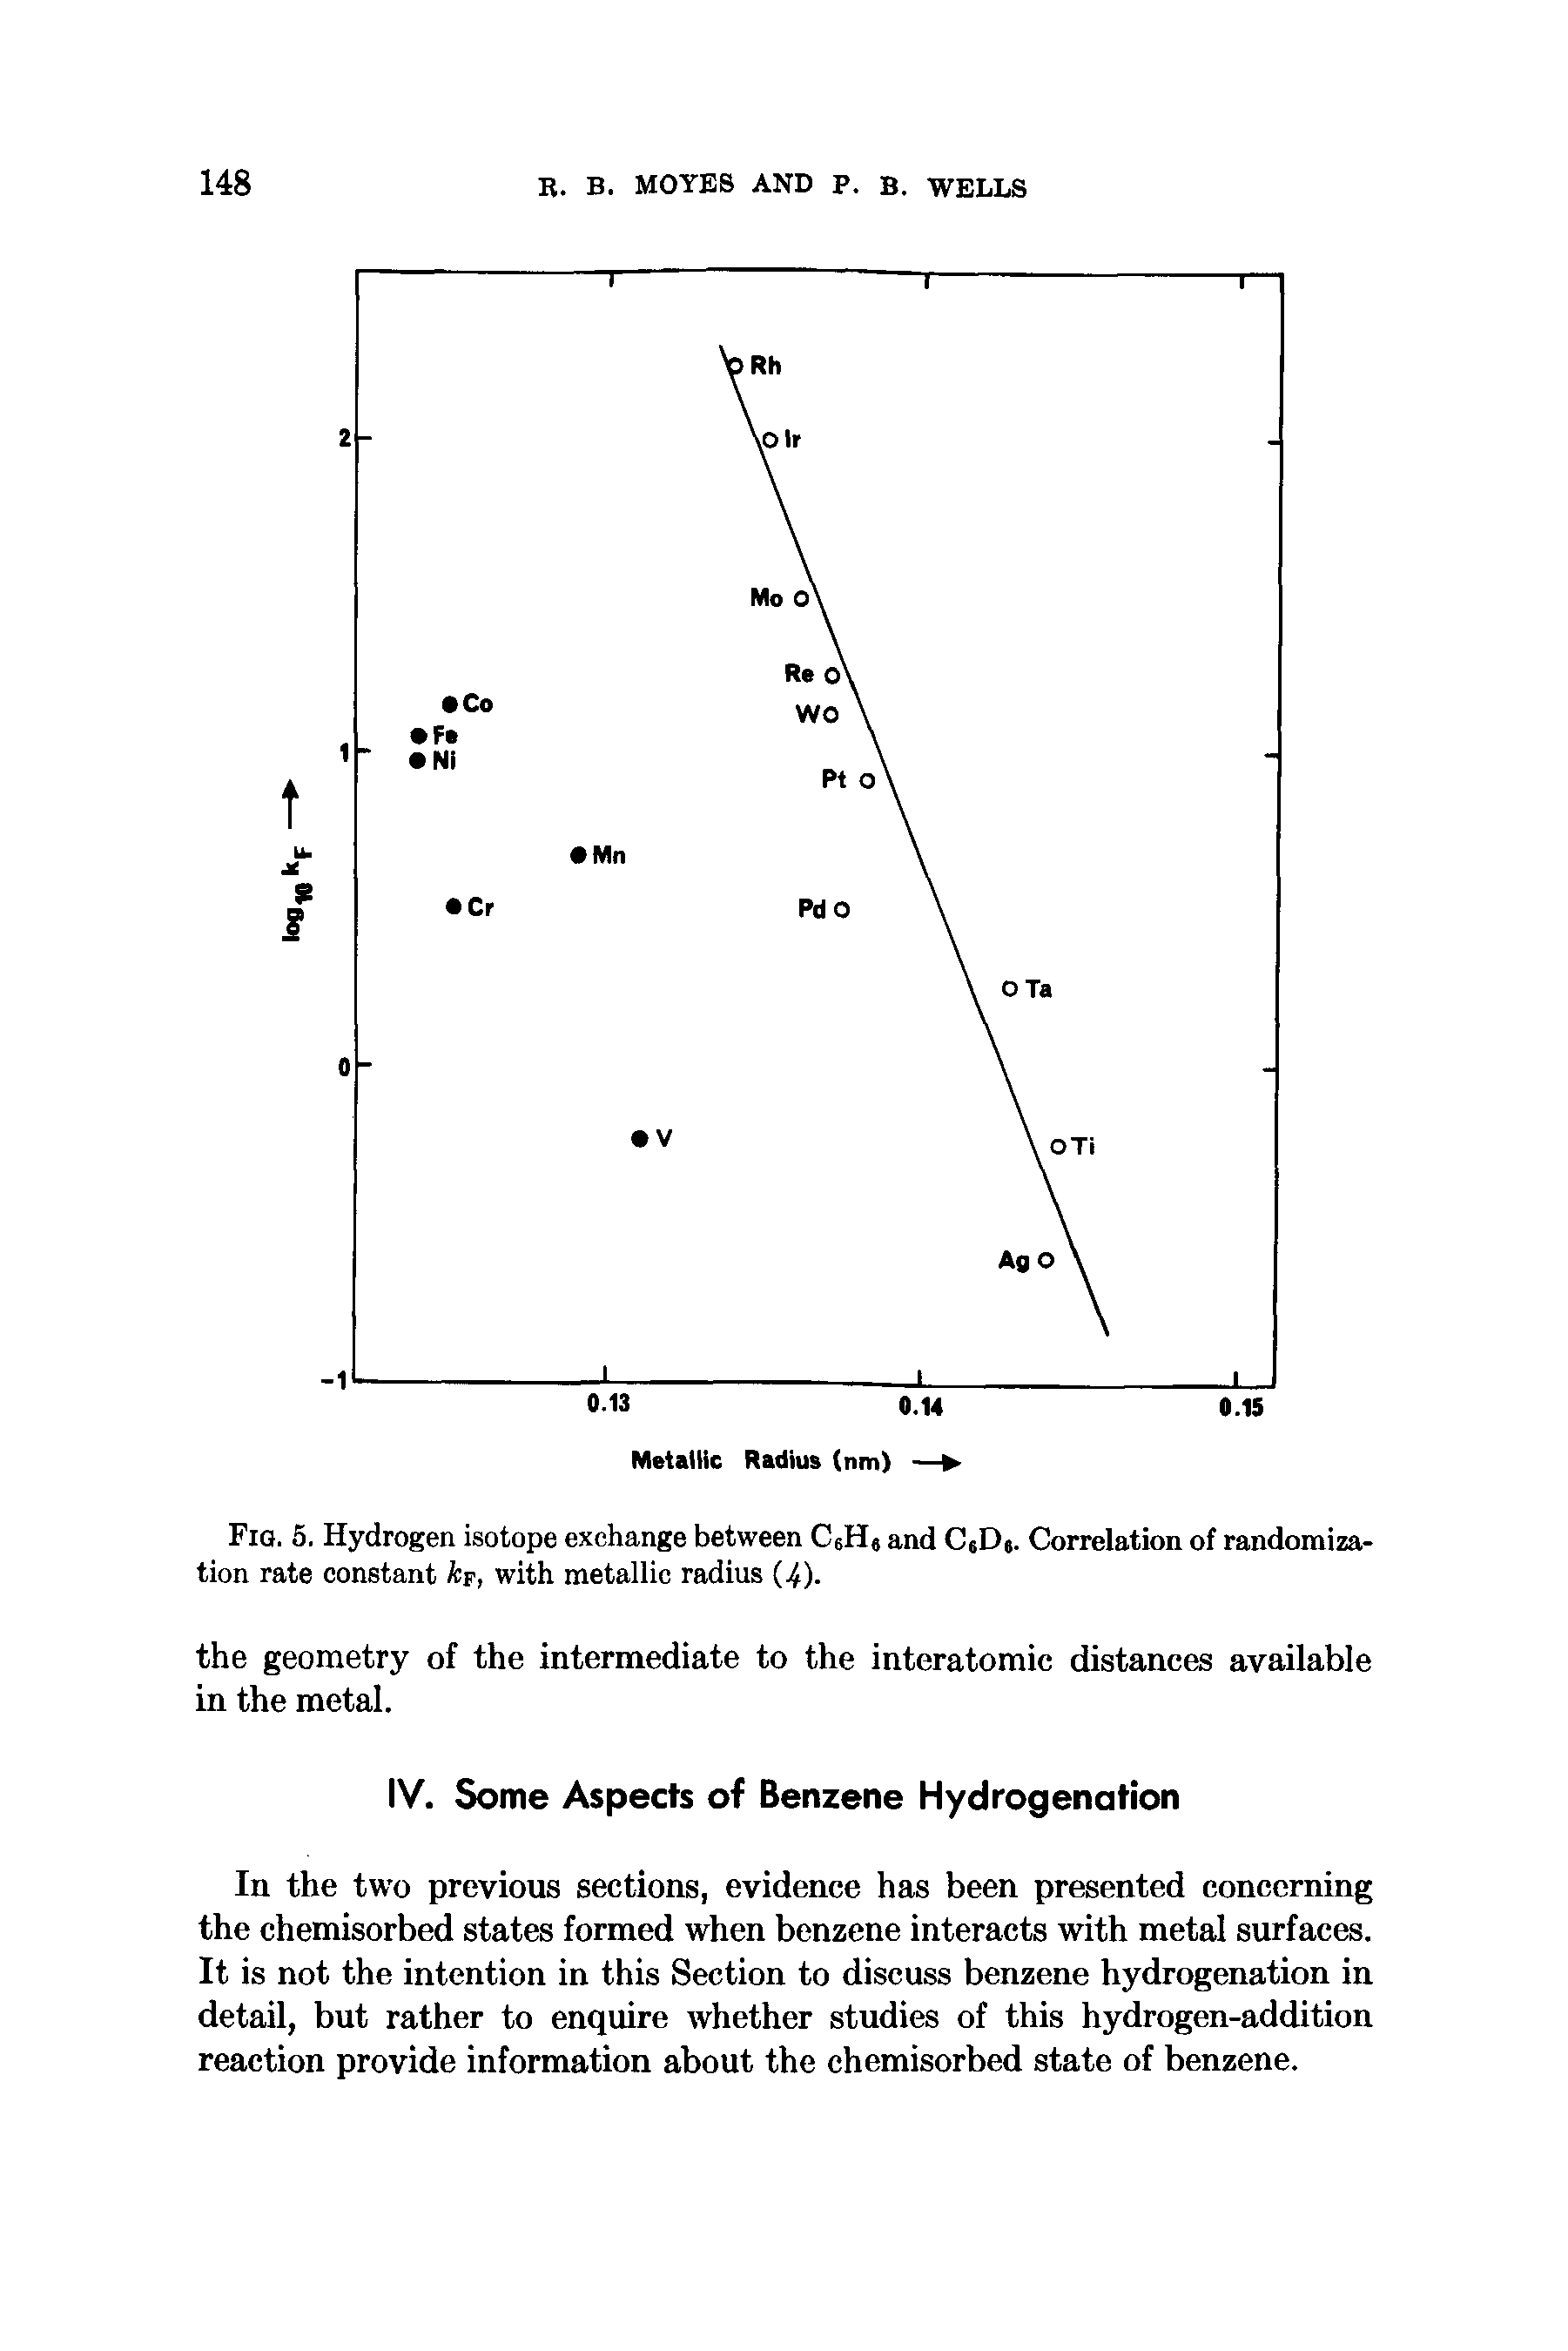 Fig. 5. Hydrogen isotope exchange between C6H9 and C6D6. Correlation of randomization rate constant kr, with metallic radius (4).